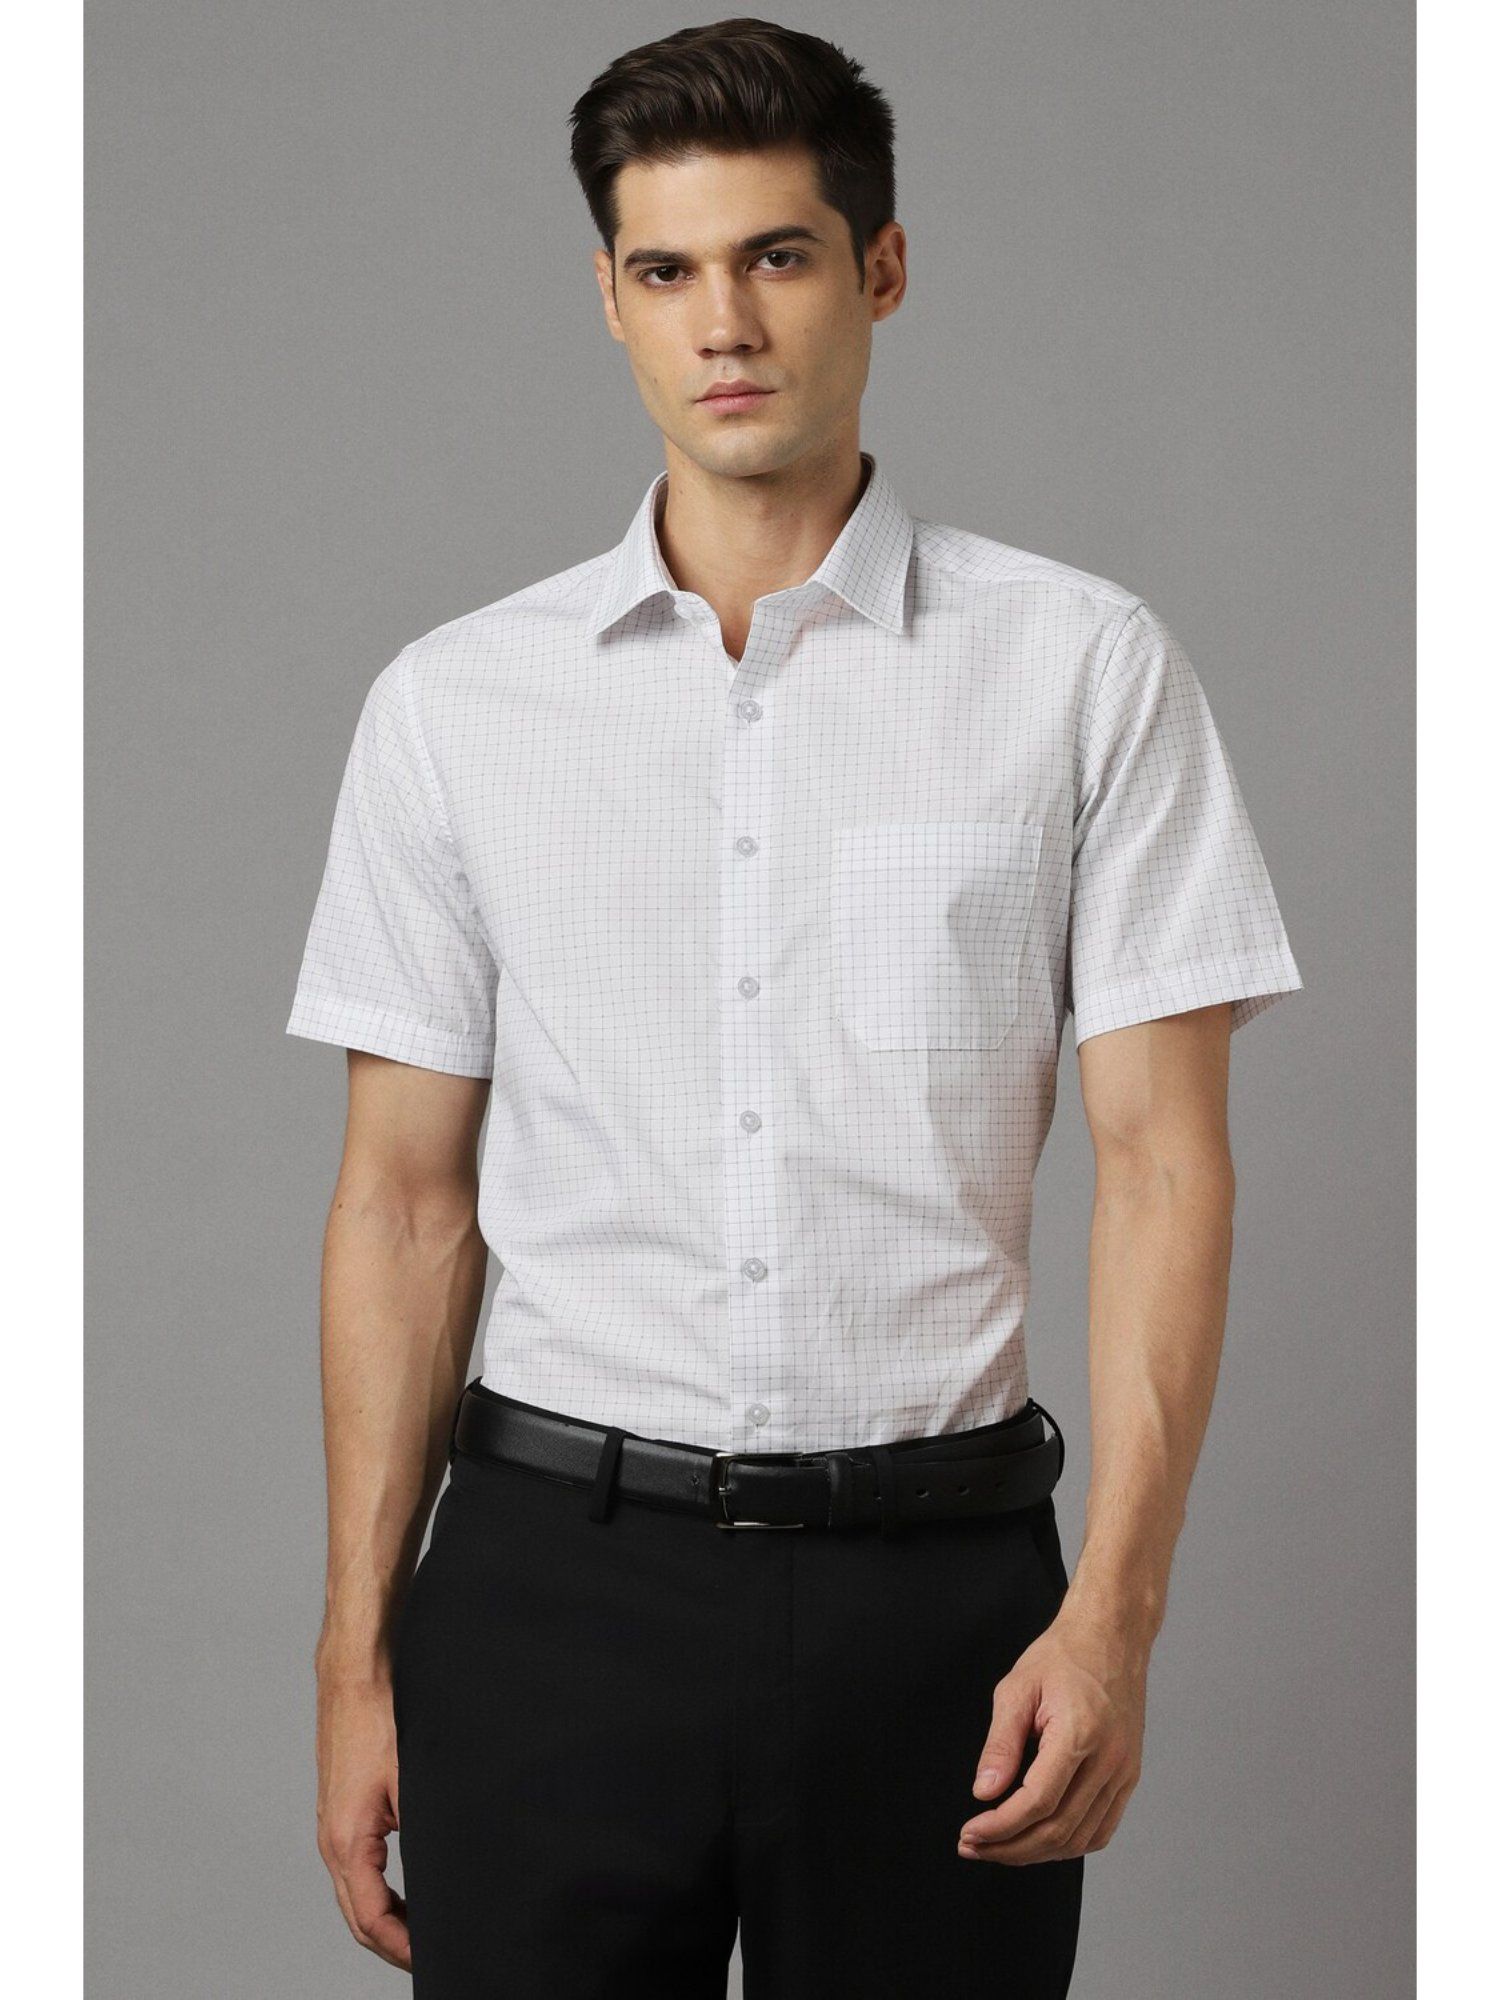 Louis Philippe-Mens Half Sleeves Slim Fit Formal Check Shirt